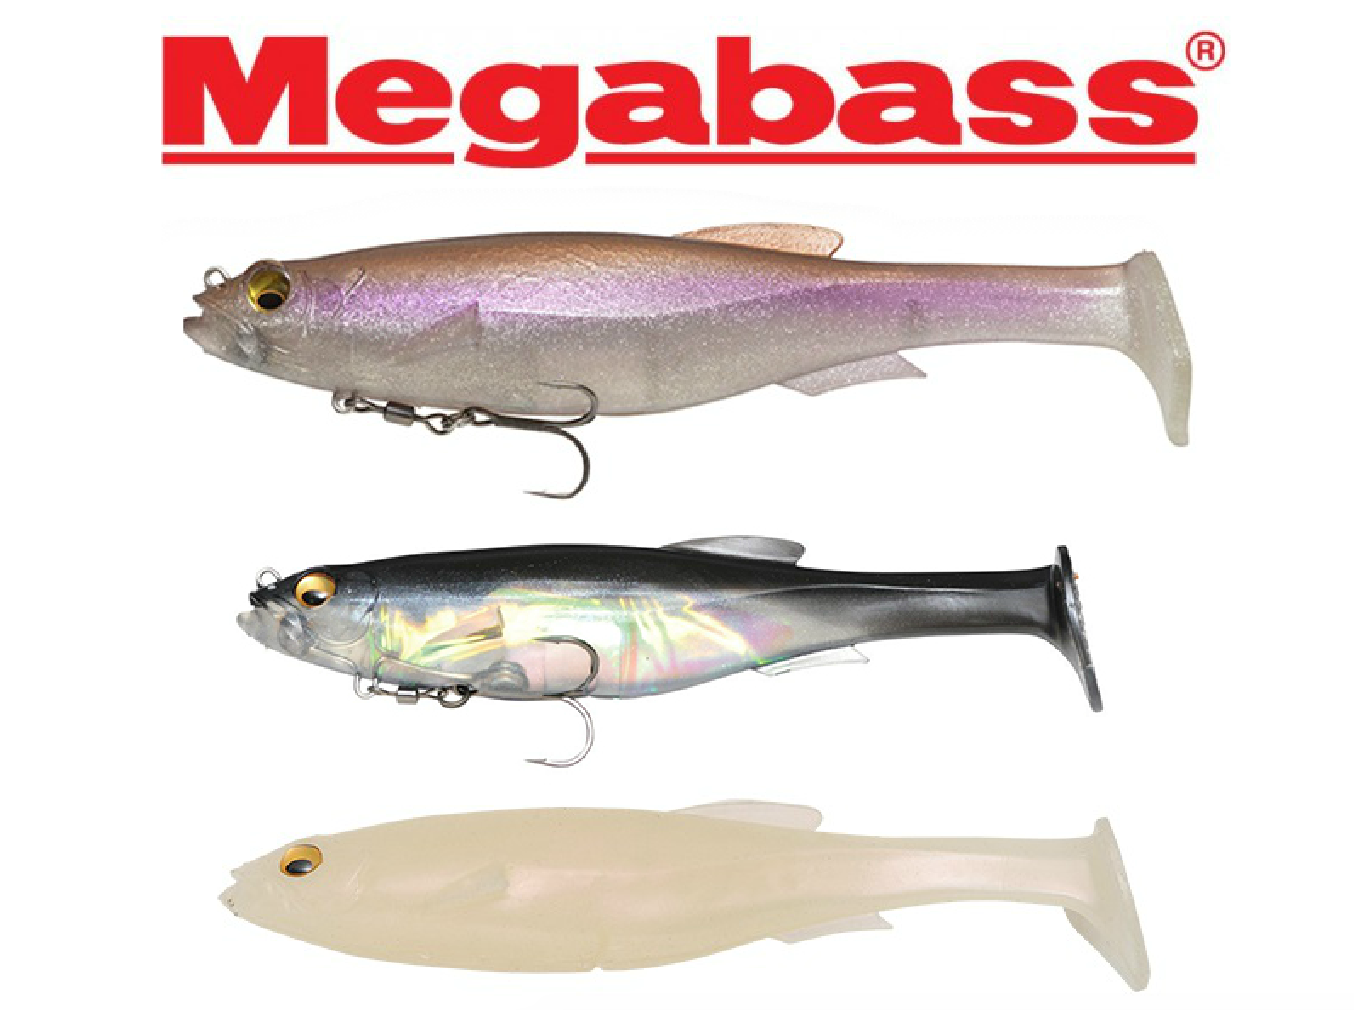 Megabass Magdraft 5 Soft Plastic Swimbait Fishing Lure - Choose